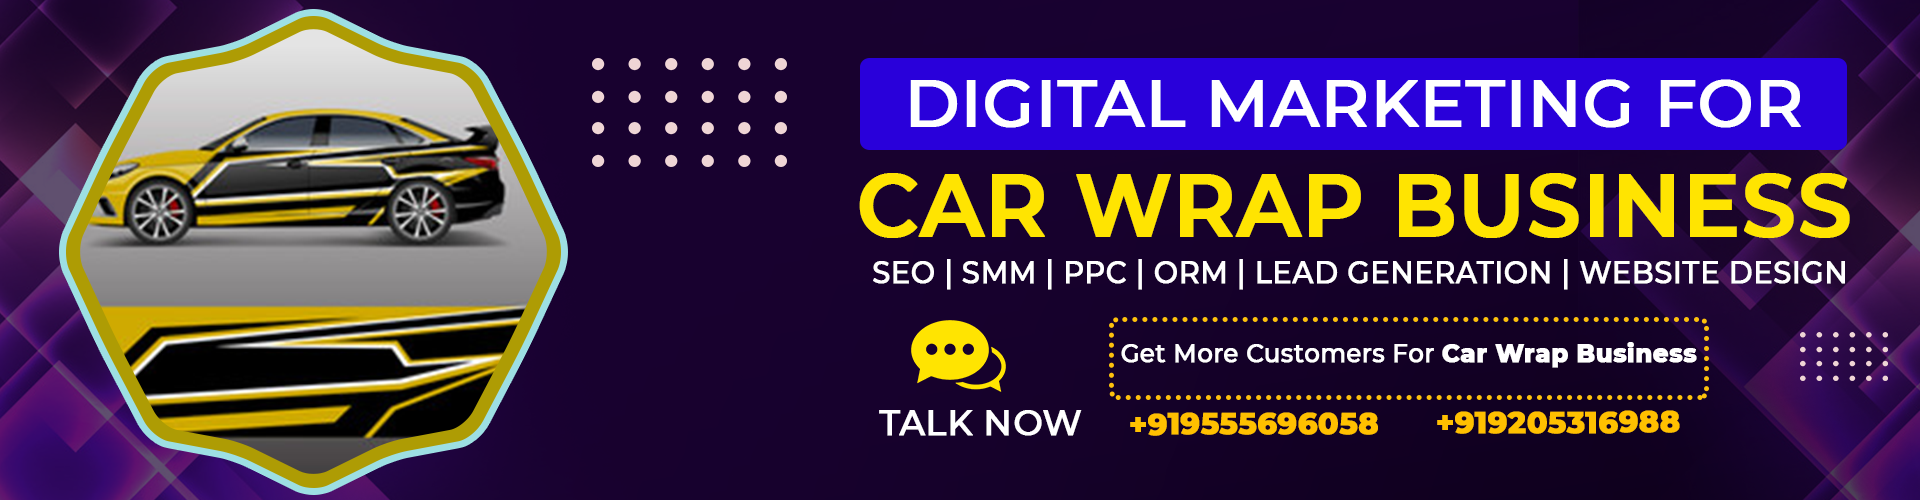 digital-marketing-for-car-wrap-business